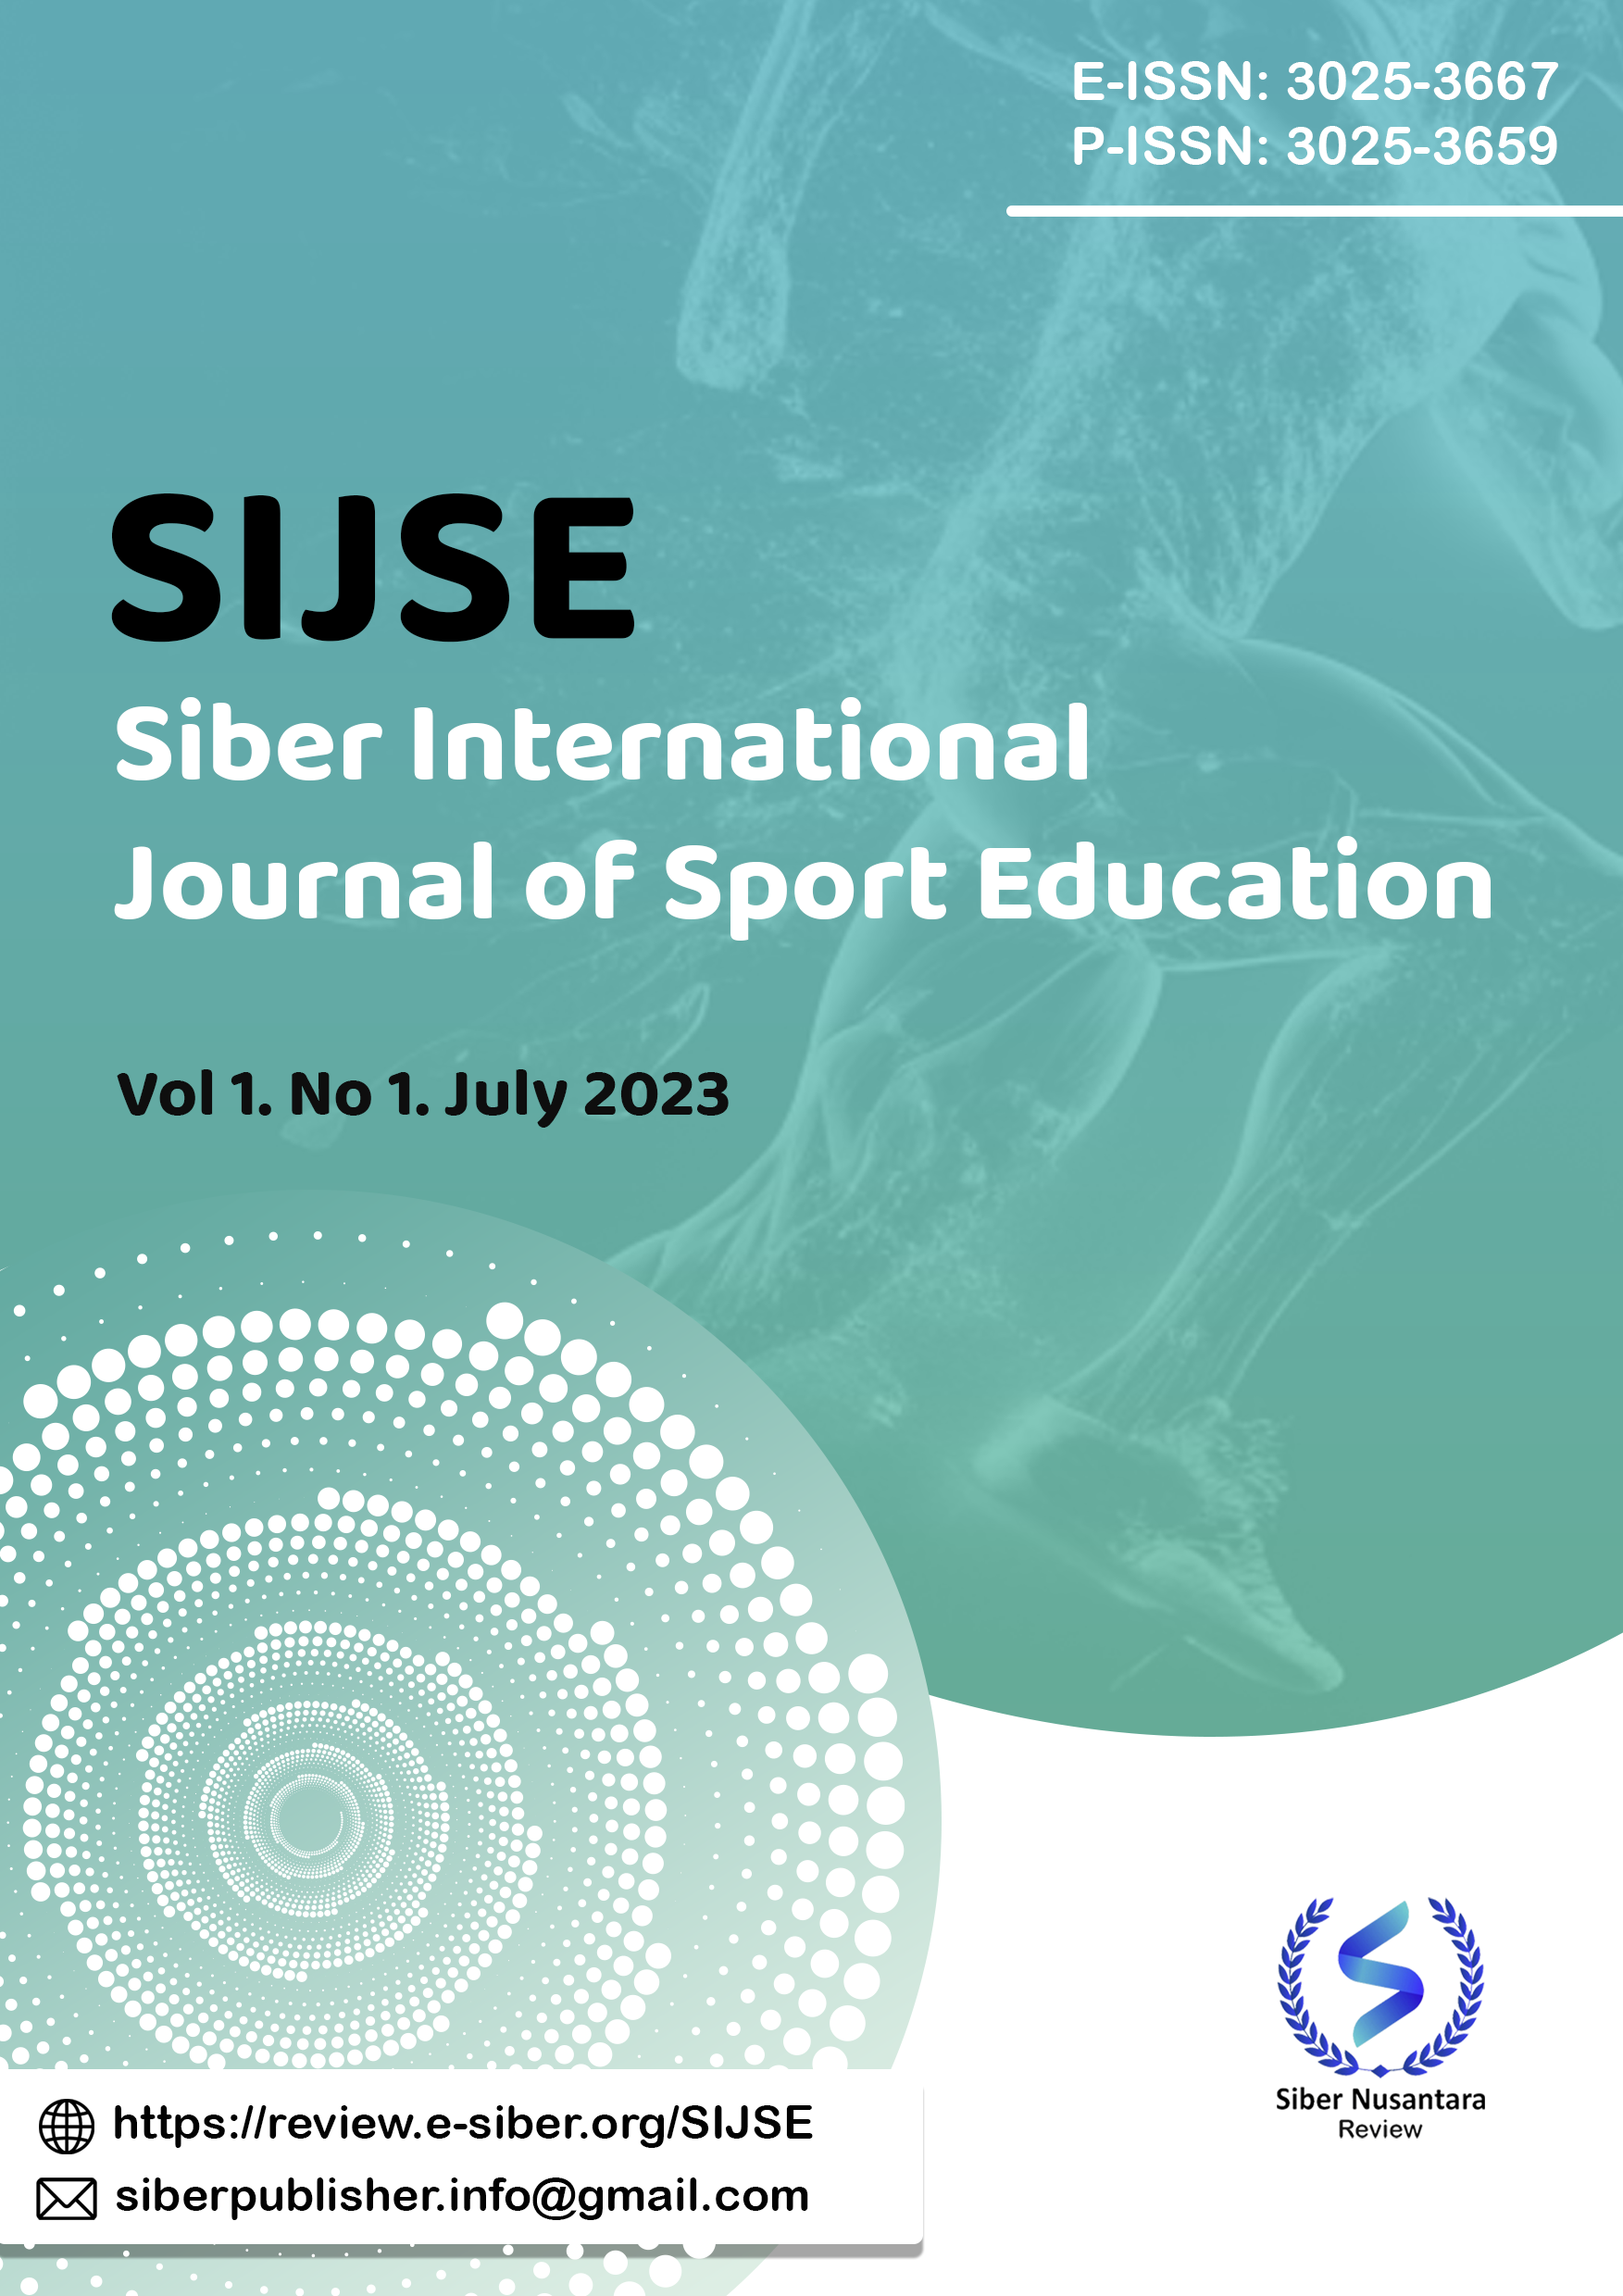 					View Vol. 1 No. 1 (2023): (SIJSE) Siber International Journal of Sport Education (July 2023)
				